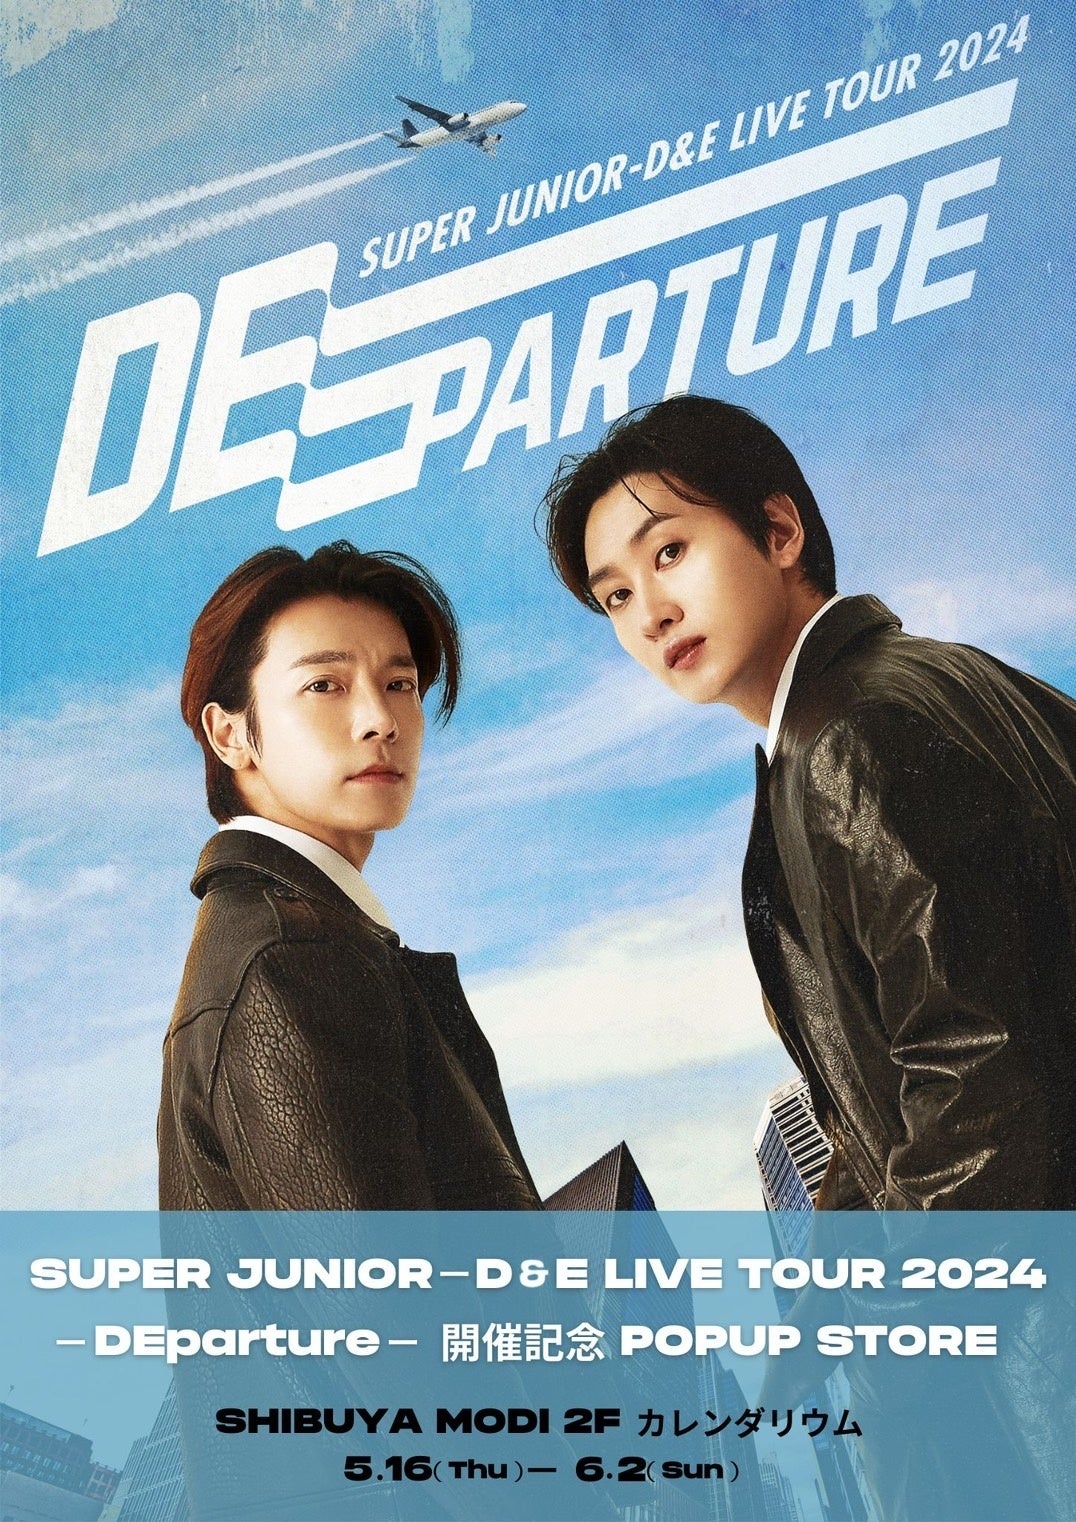 wSUPER JUNIOR-D&E LIVE TOUR 2024 -DEparture-xJËLO@aJMODI@POPUP STORE{X^[gI